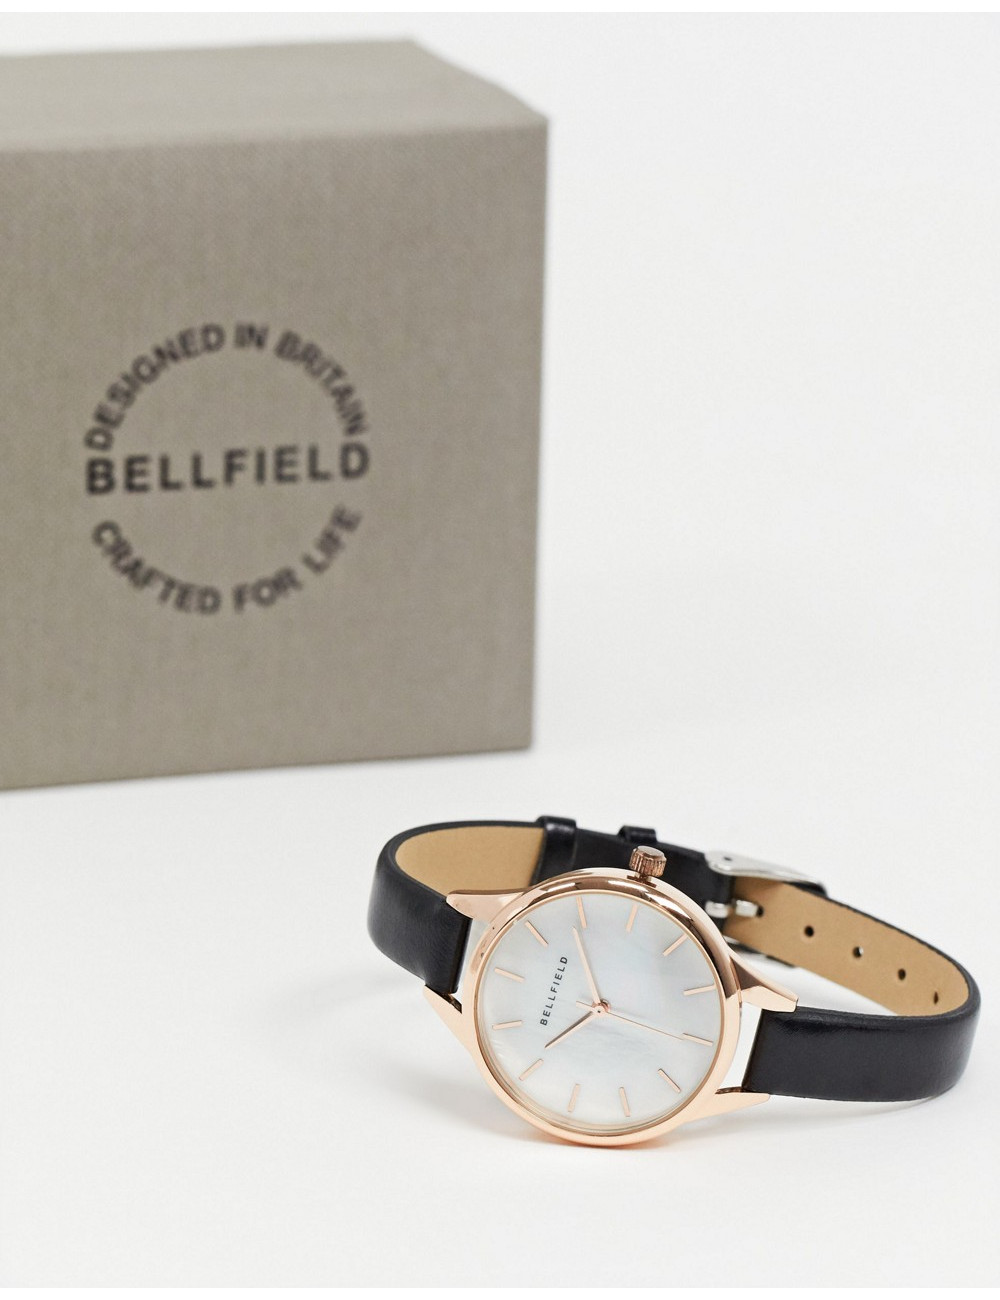 Bellfield watch with black...